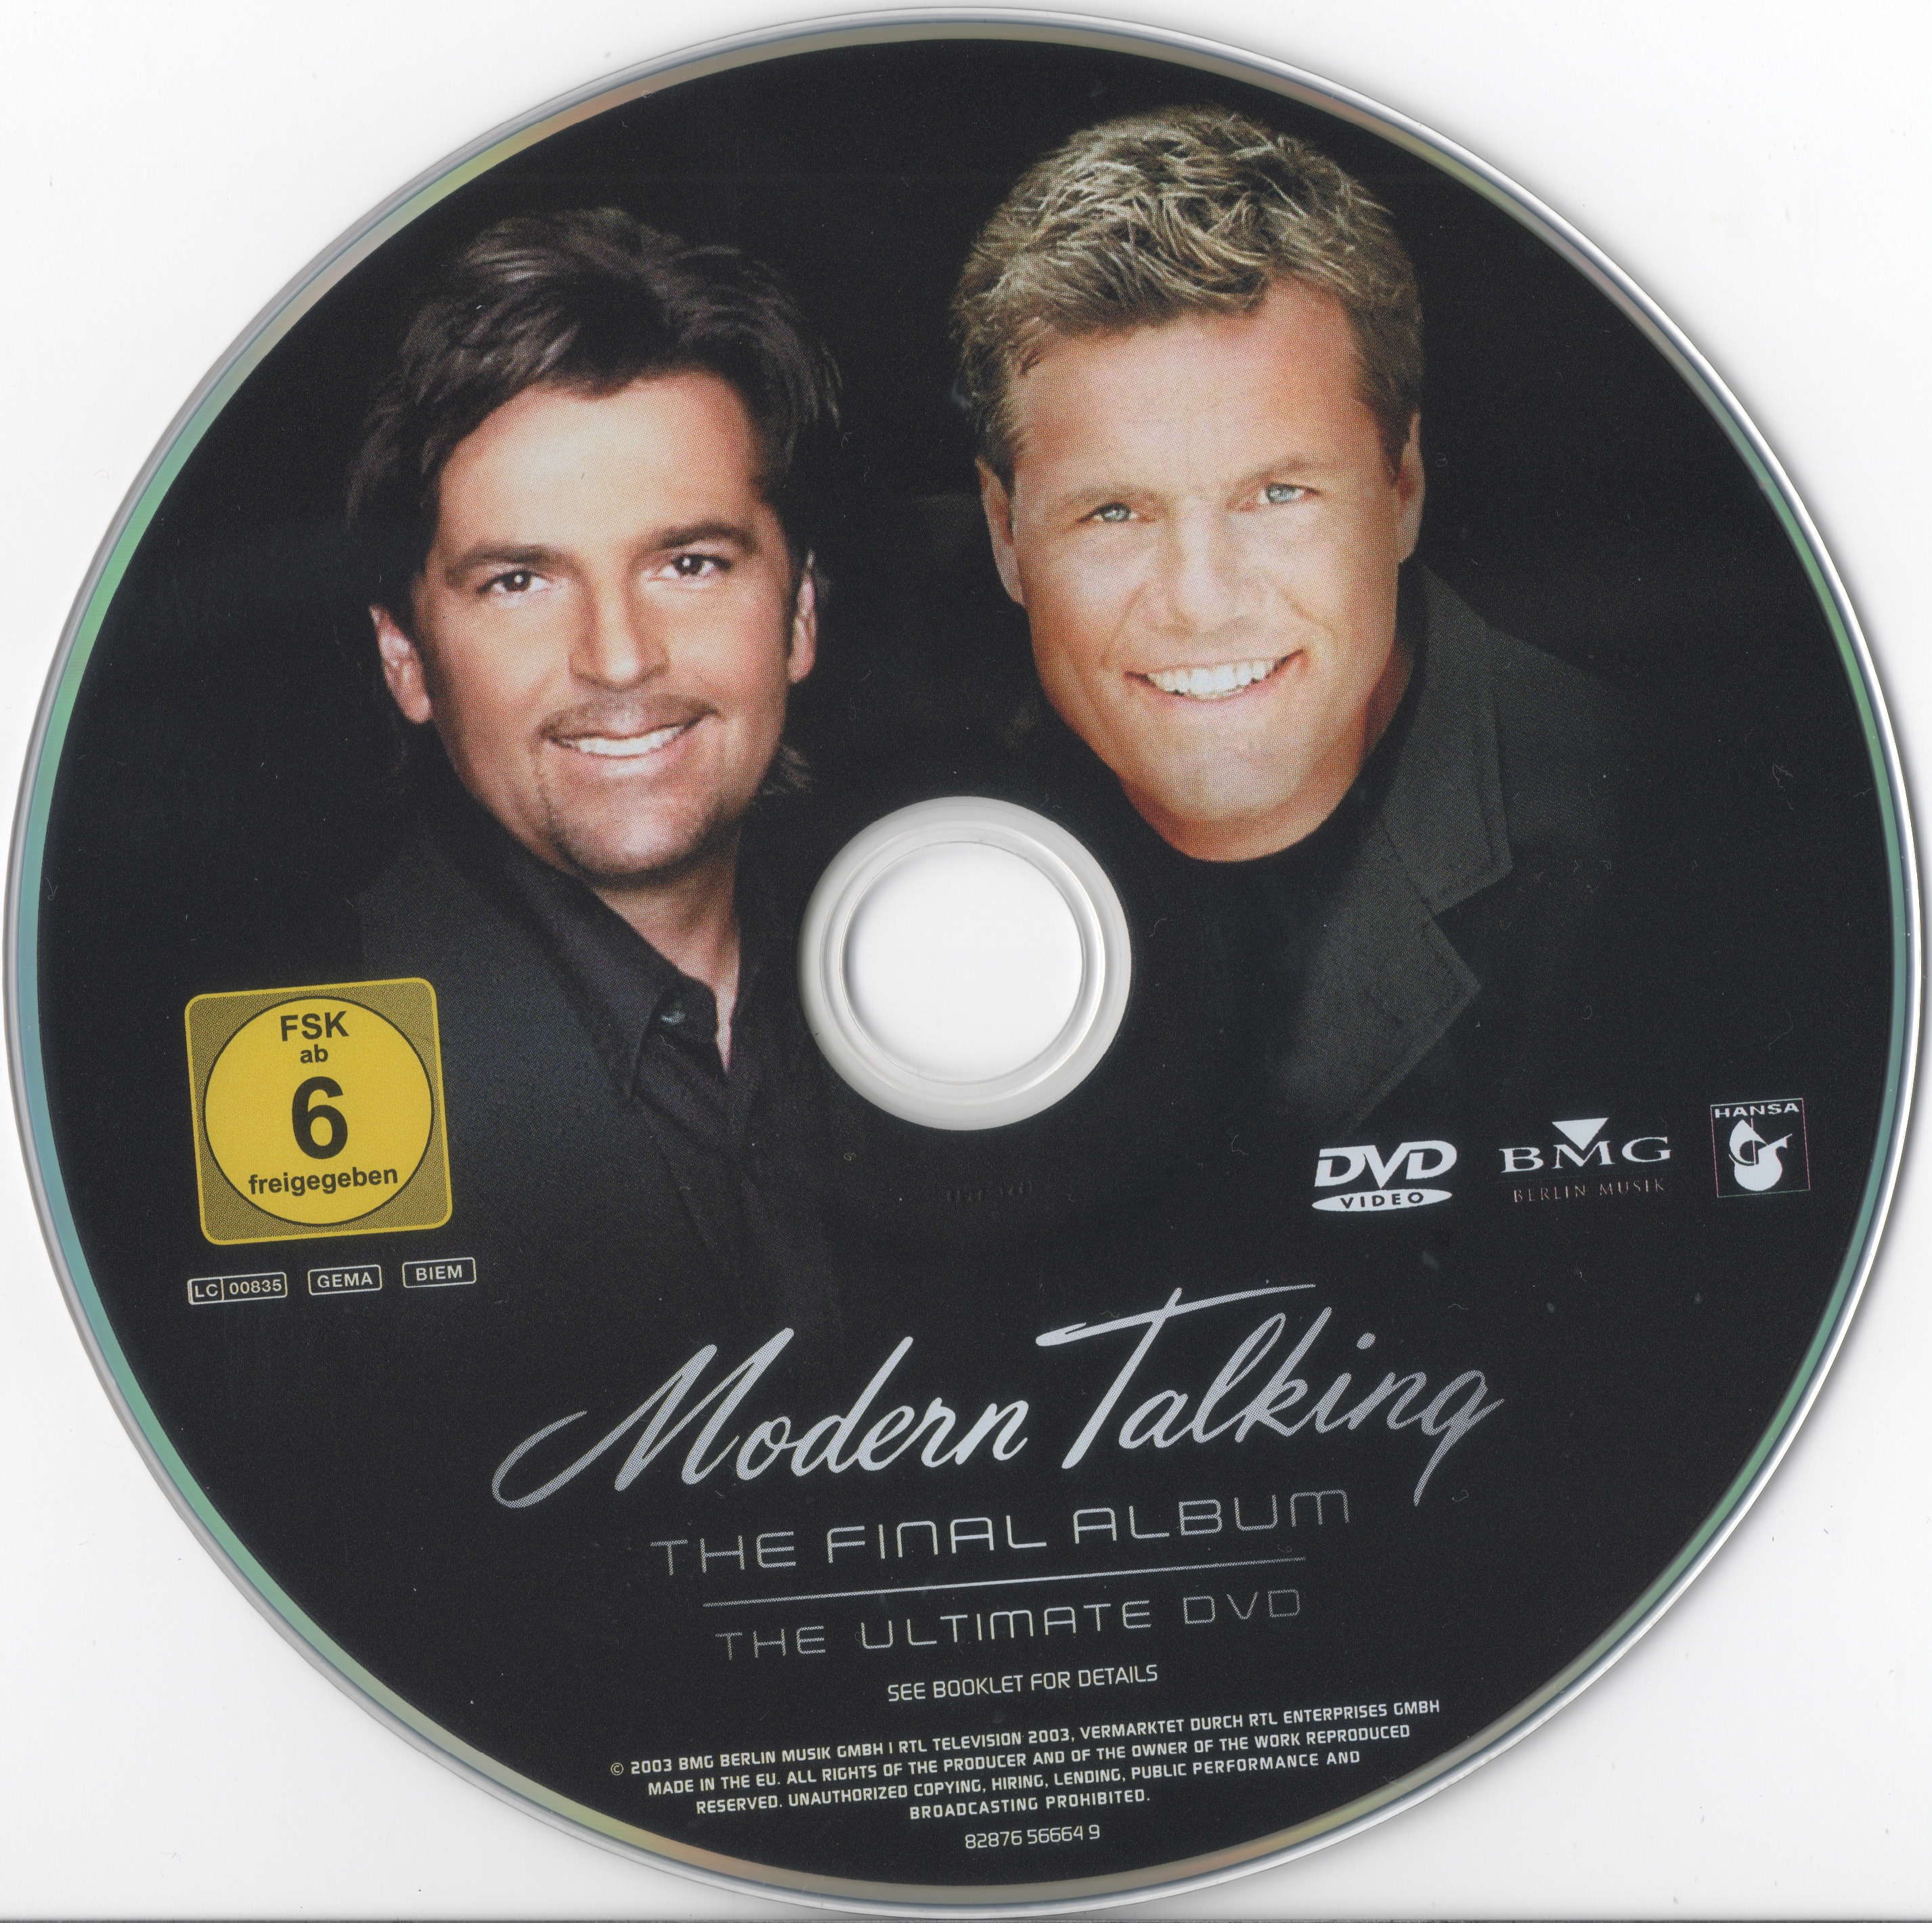 Модерн токинг мп3 лучшее. Modern talking 1985 CD. Группа Modern talking 2003. Modern talking CD обложки. Modern talking the 1st album 1985.